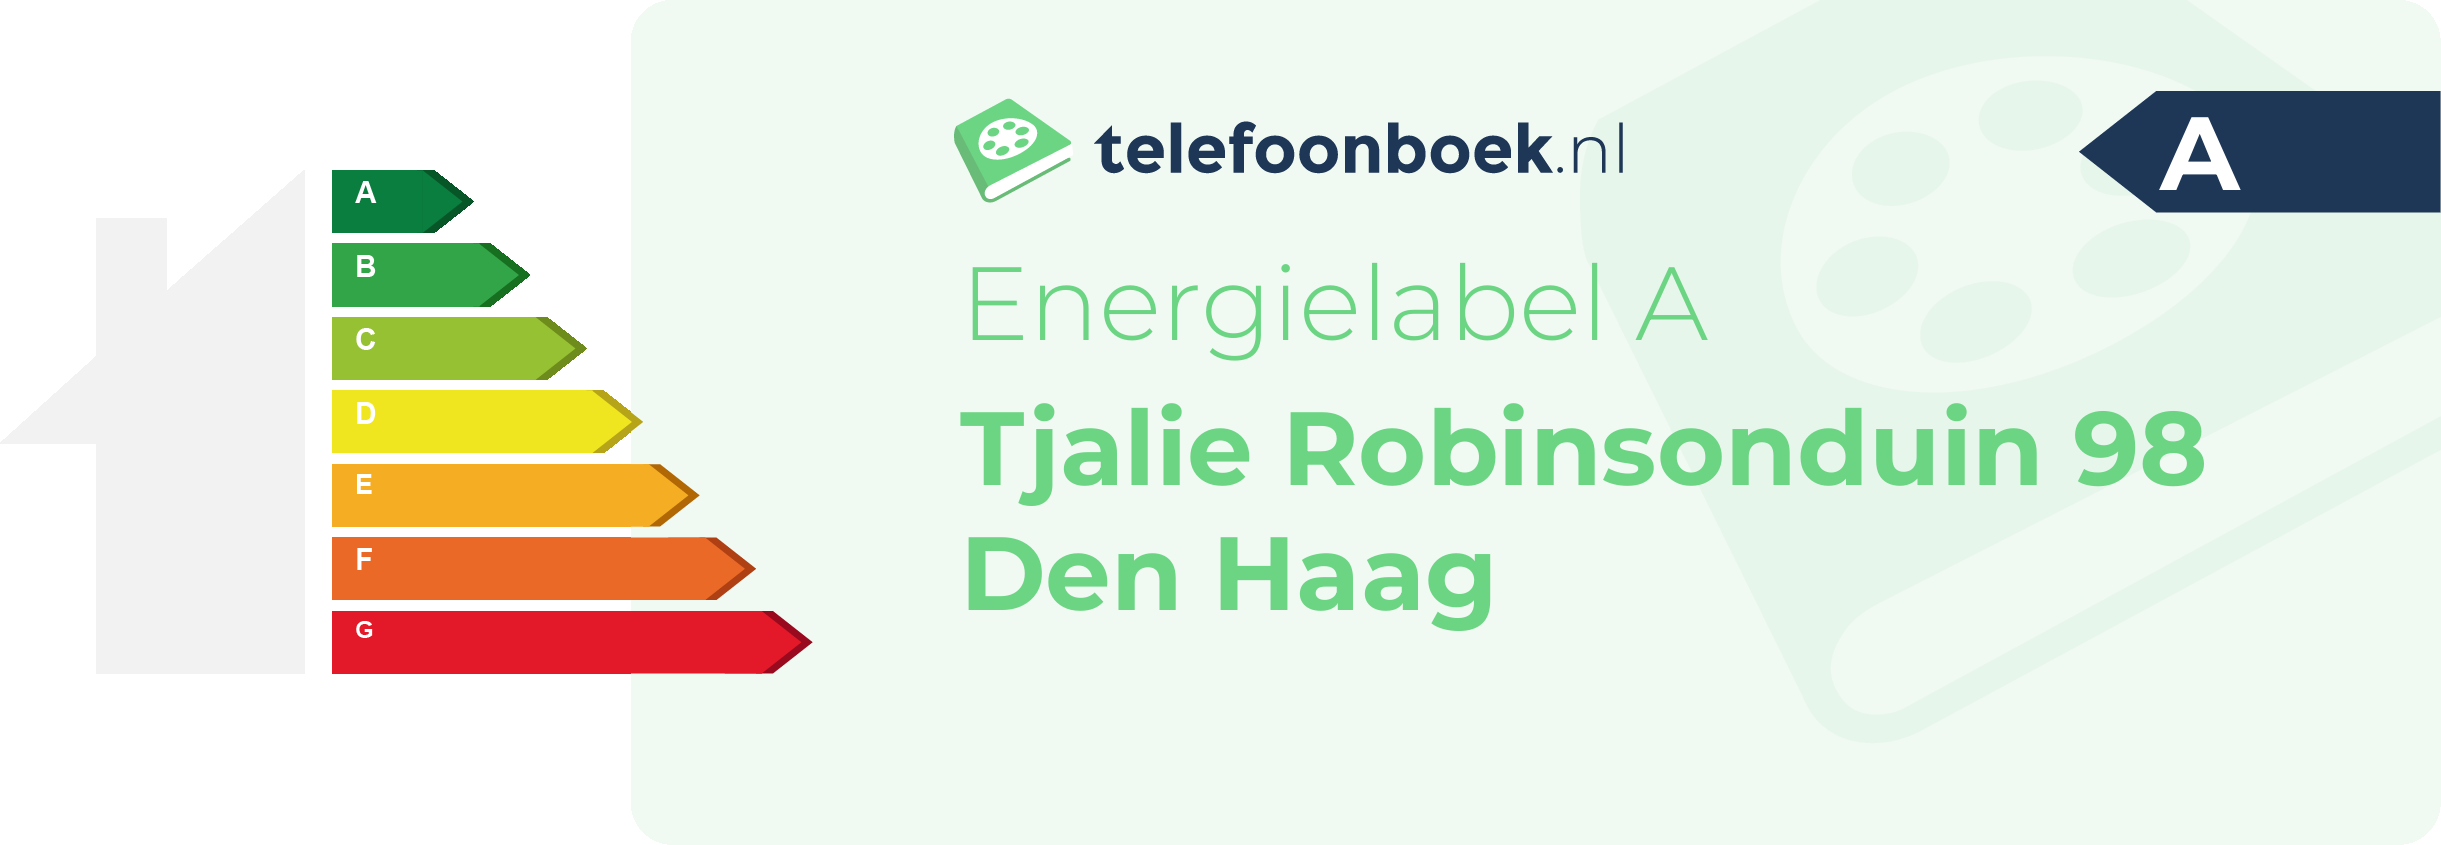 Energielabel Tjalie Robinsonduin 98 Den Haag